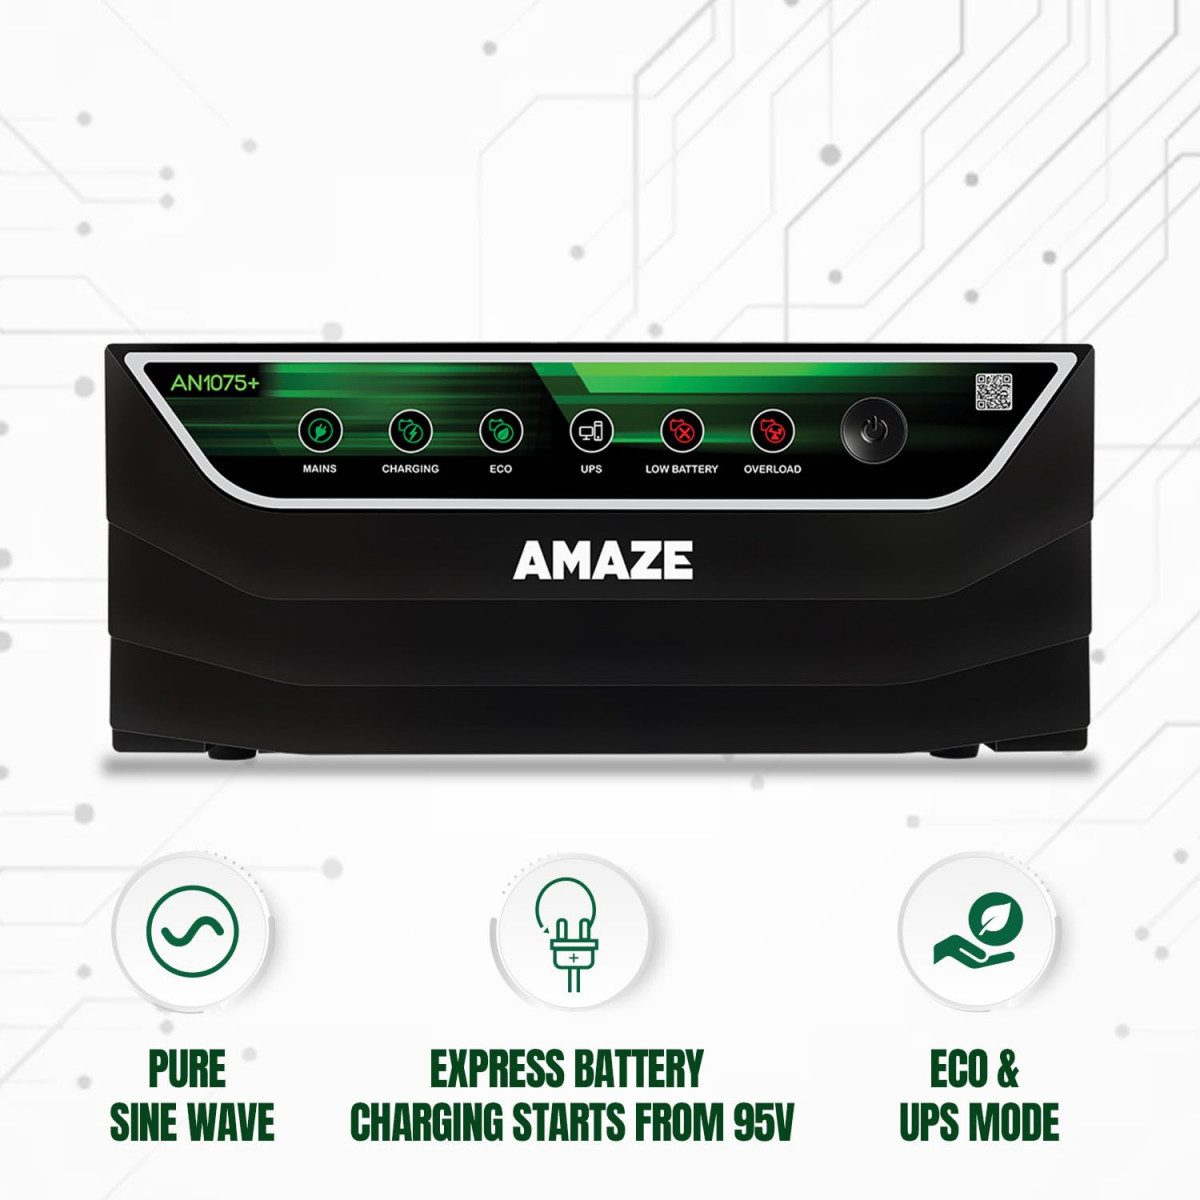 AMAZE AQ 107512V 900VA Square Wave Inverter for Home Offices and Shops